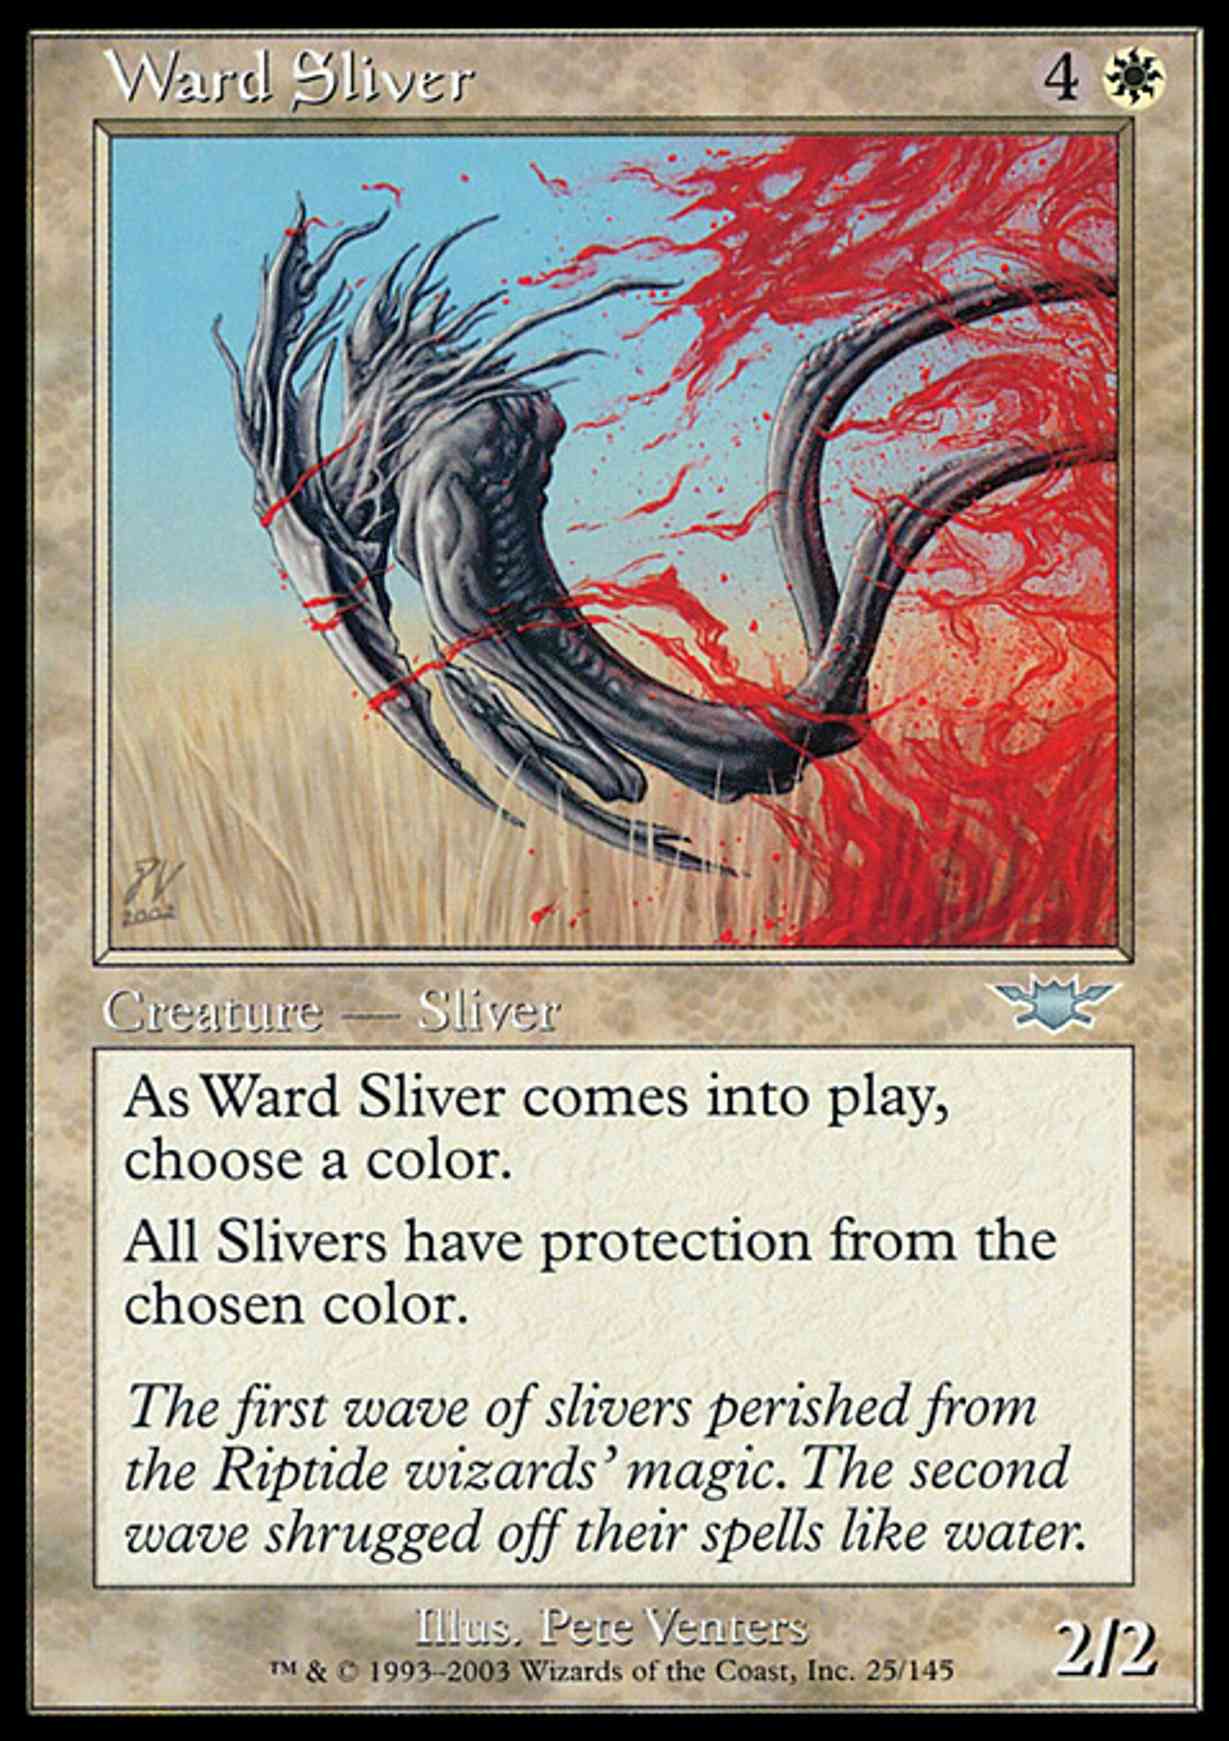 Ward Sliver magic card front